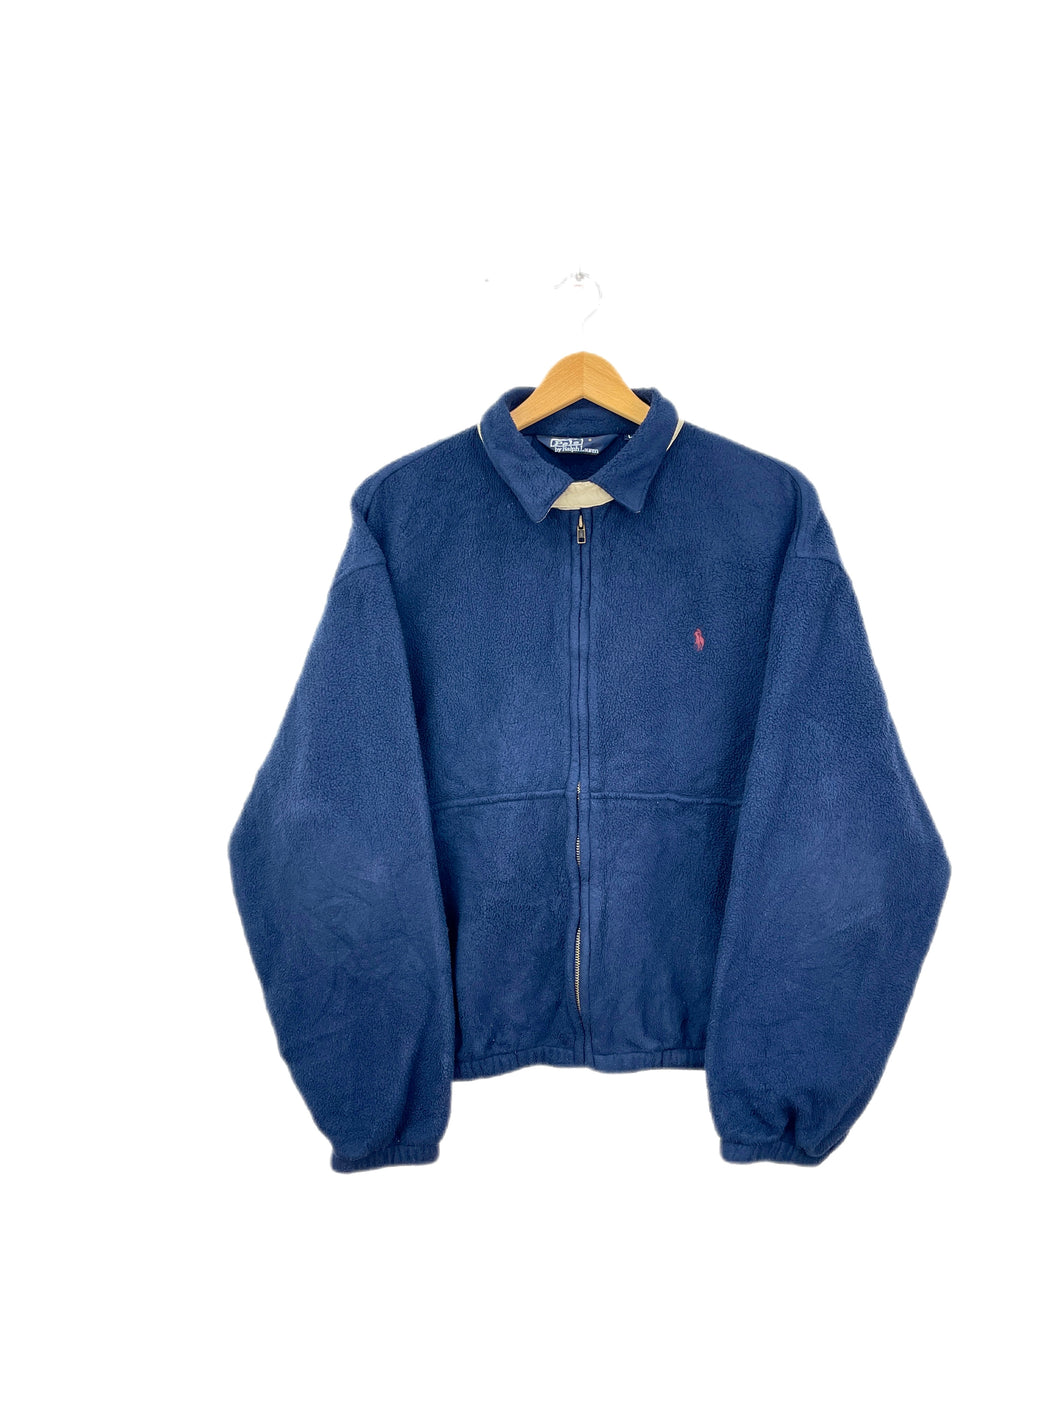 Ralph Lauren Harrington Fleece Jacket - Large